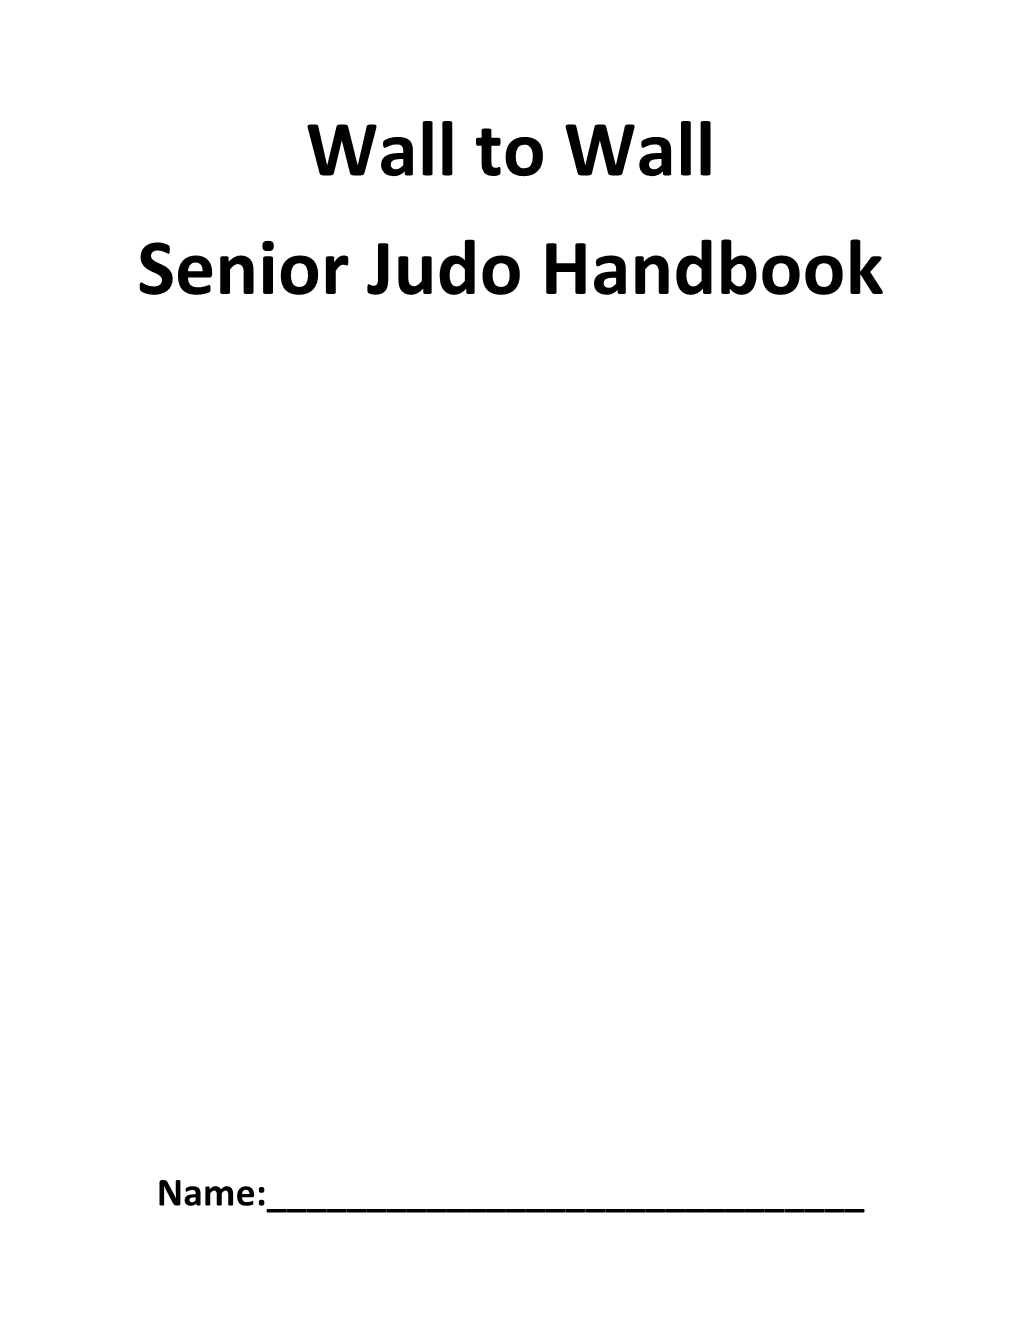 Wall to Wall Senior Judo Handbook